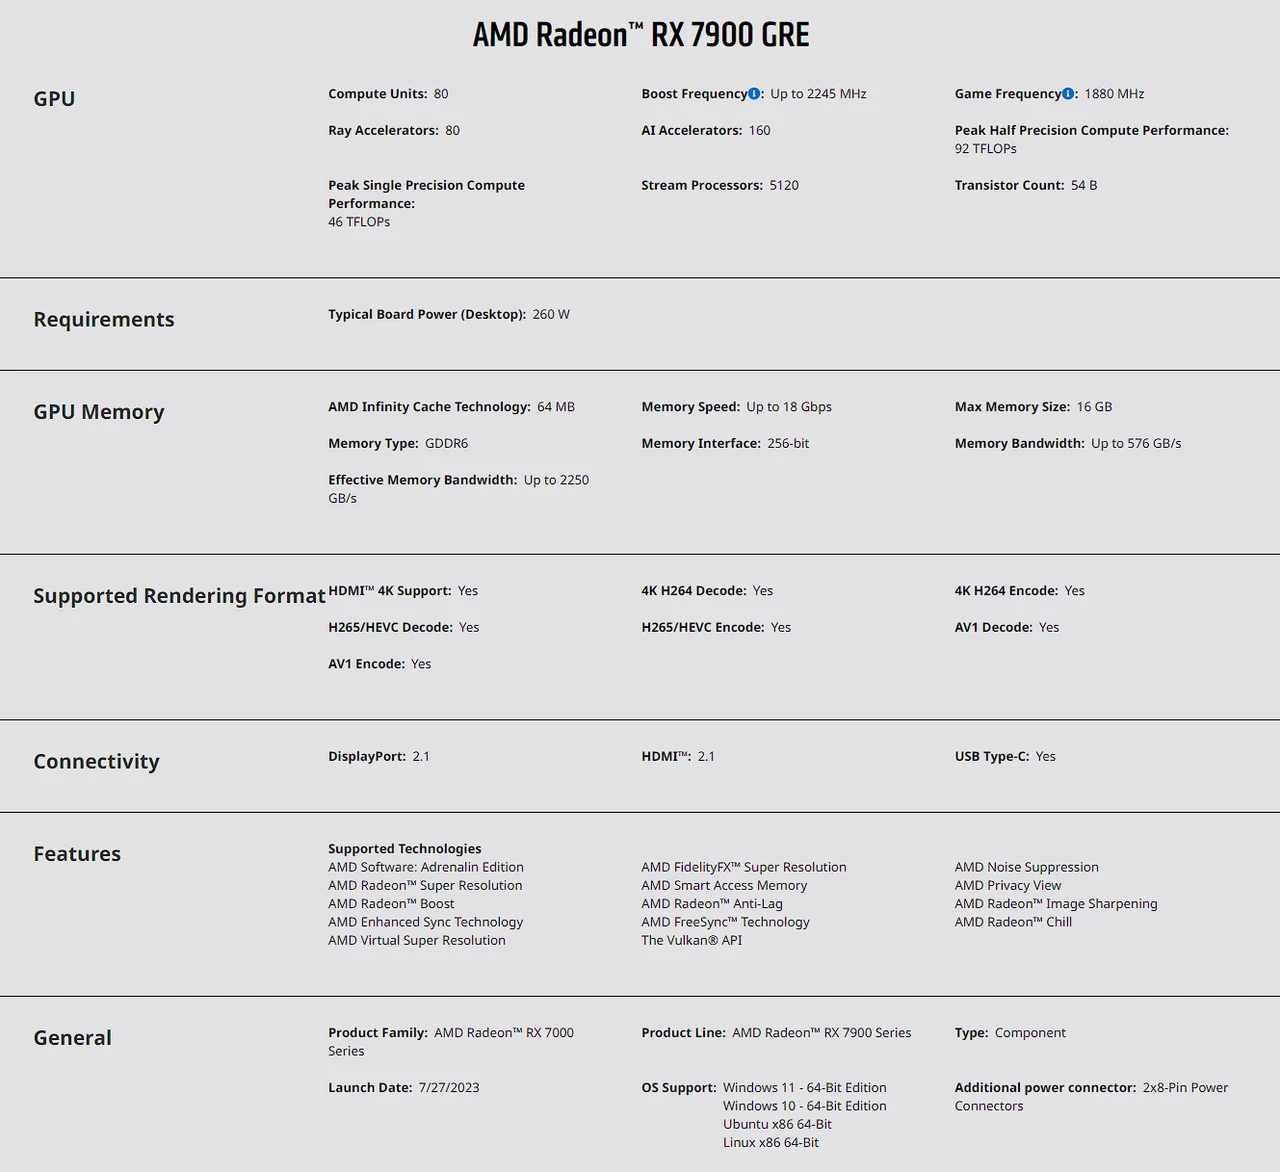 AMD Radeon RX 7900 GRE specifications